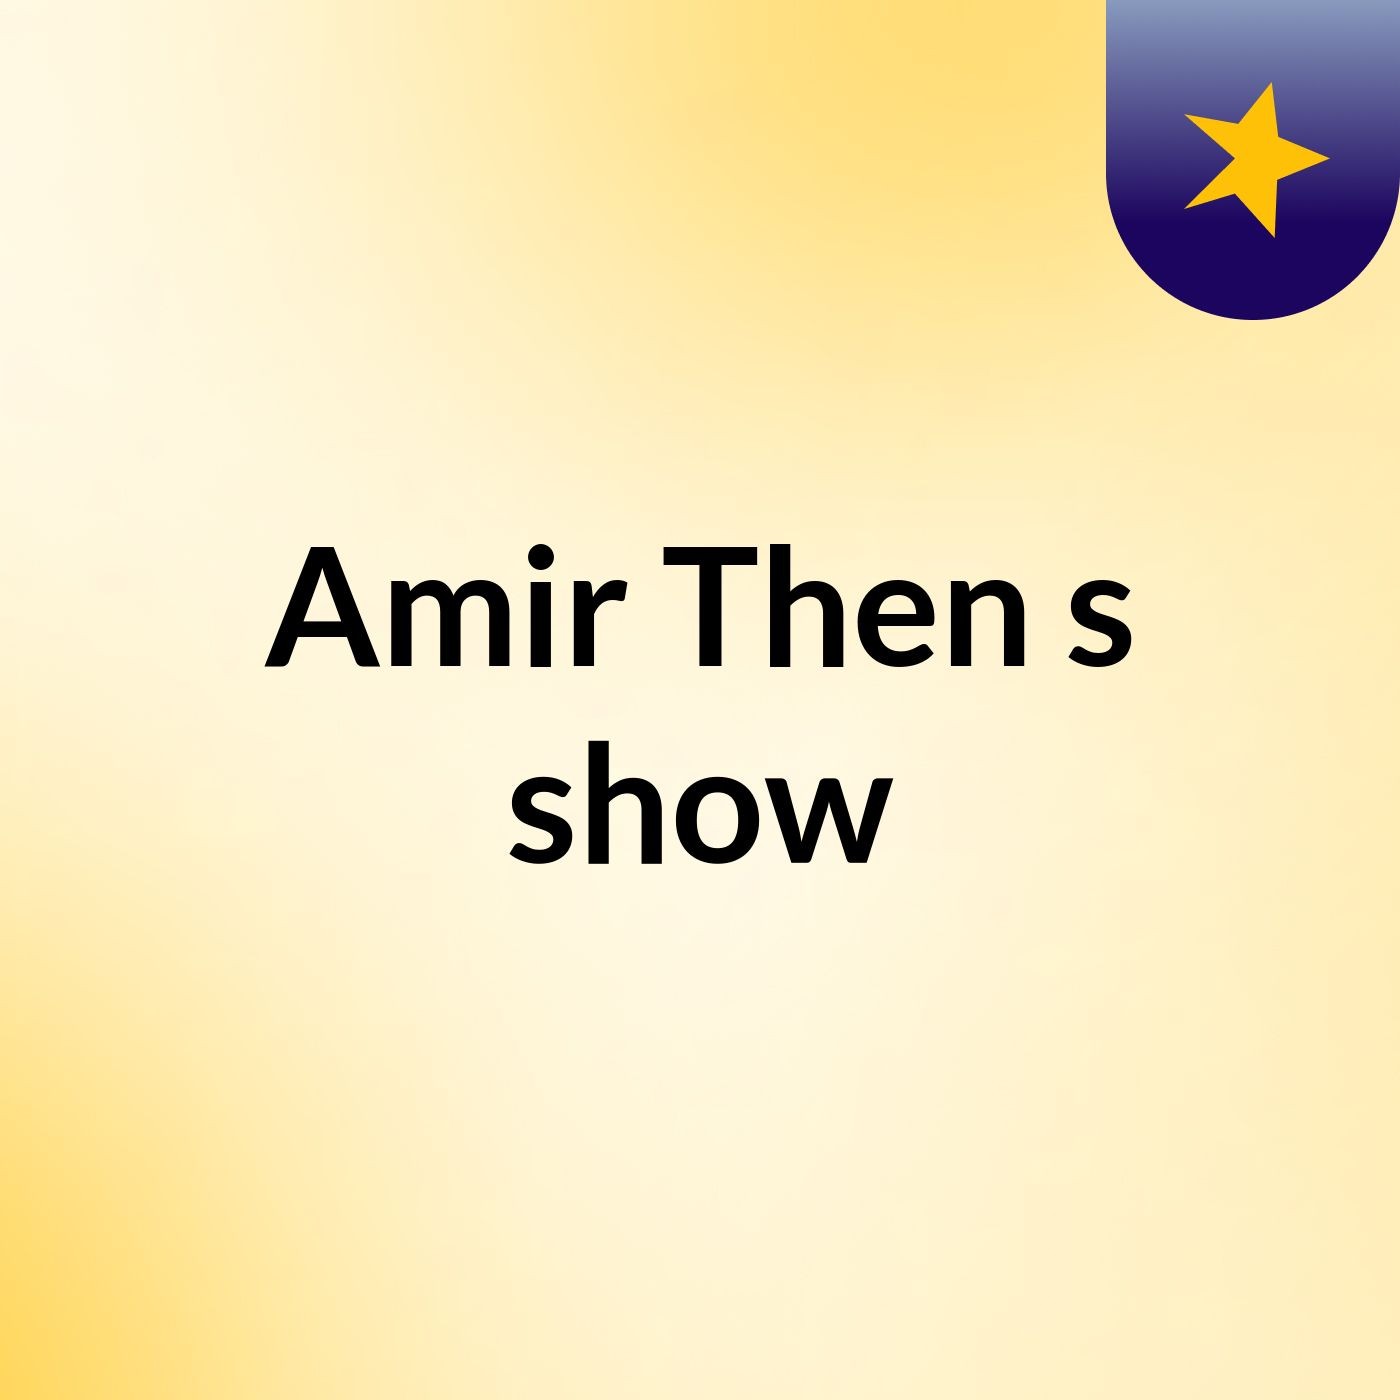 Amir Then's show